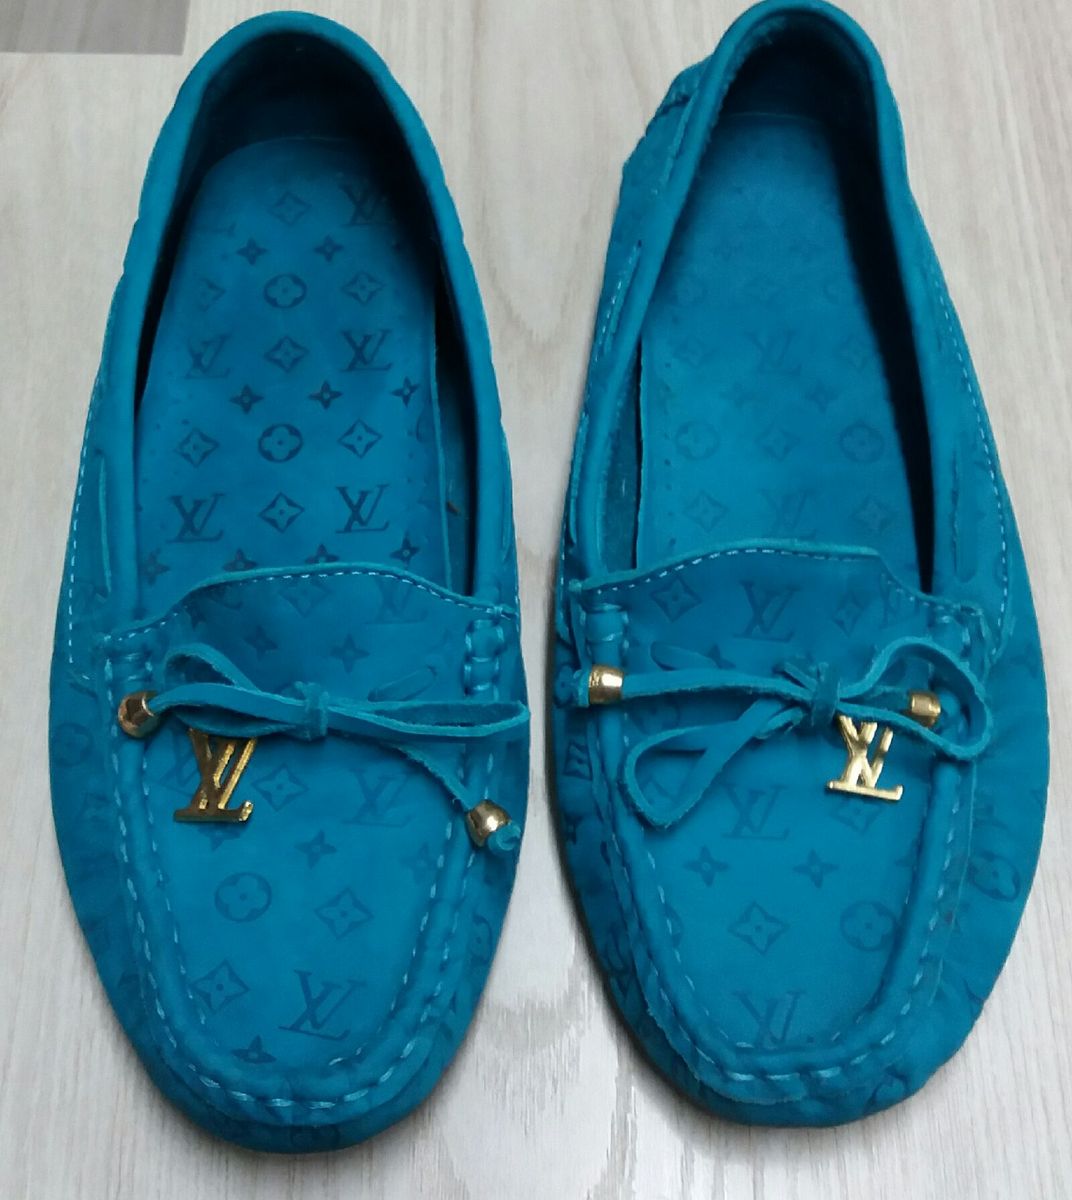 Mocassim Louis Vuitton Feminino Frete Grátis - R$ 99,90  Mocassins  femininos, Sapatilhas femininas, Sapatos louis vuitton